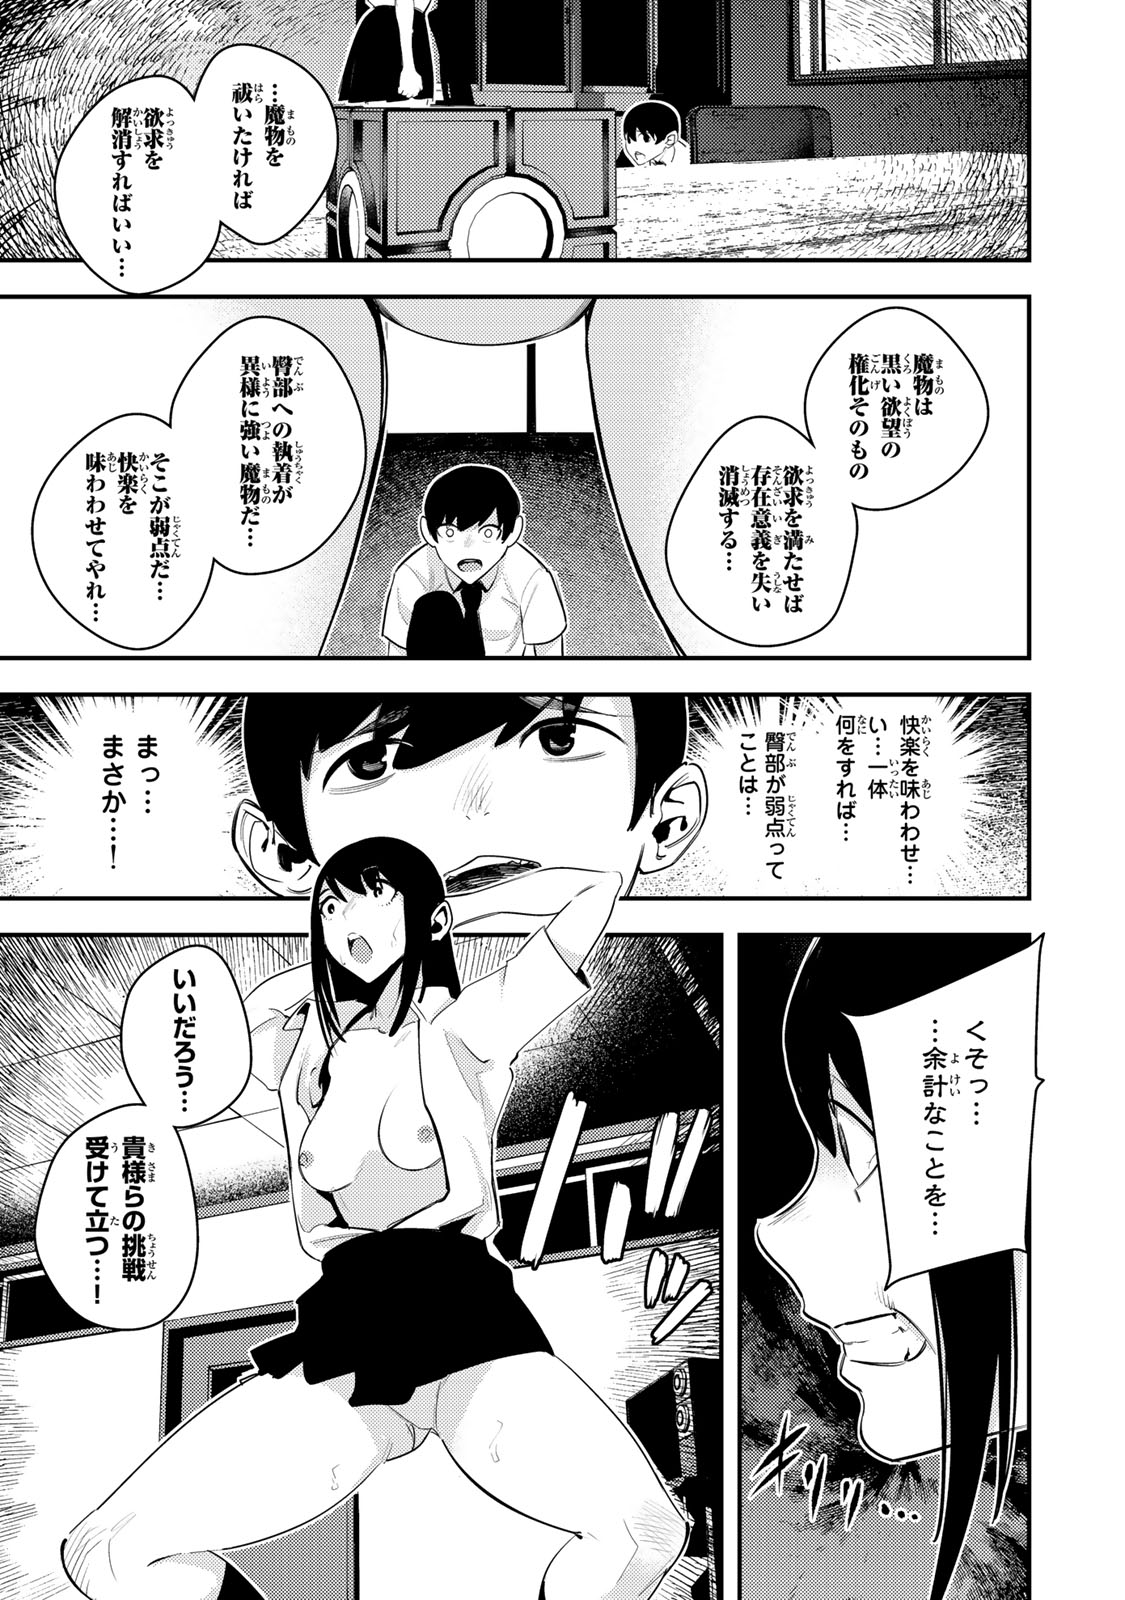 Seima Toubatsu Deneidan - Chapter 1 - Page 24